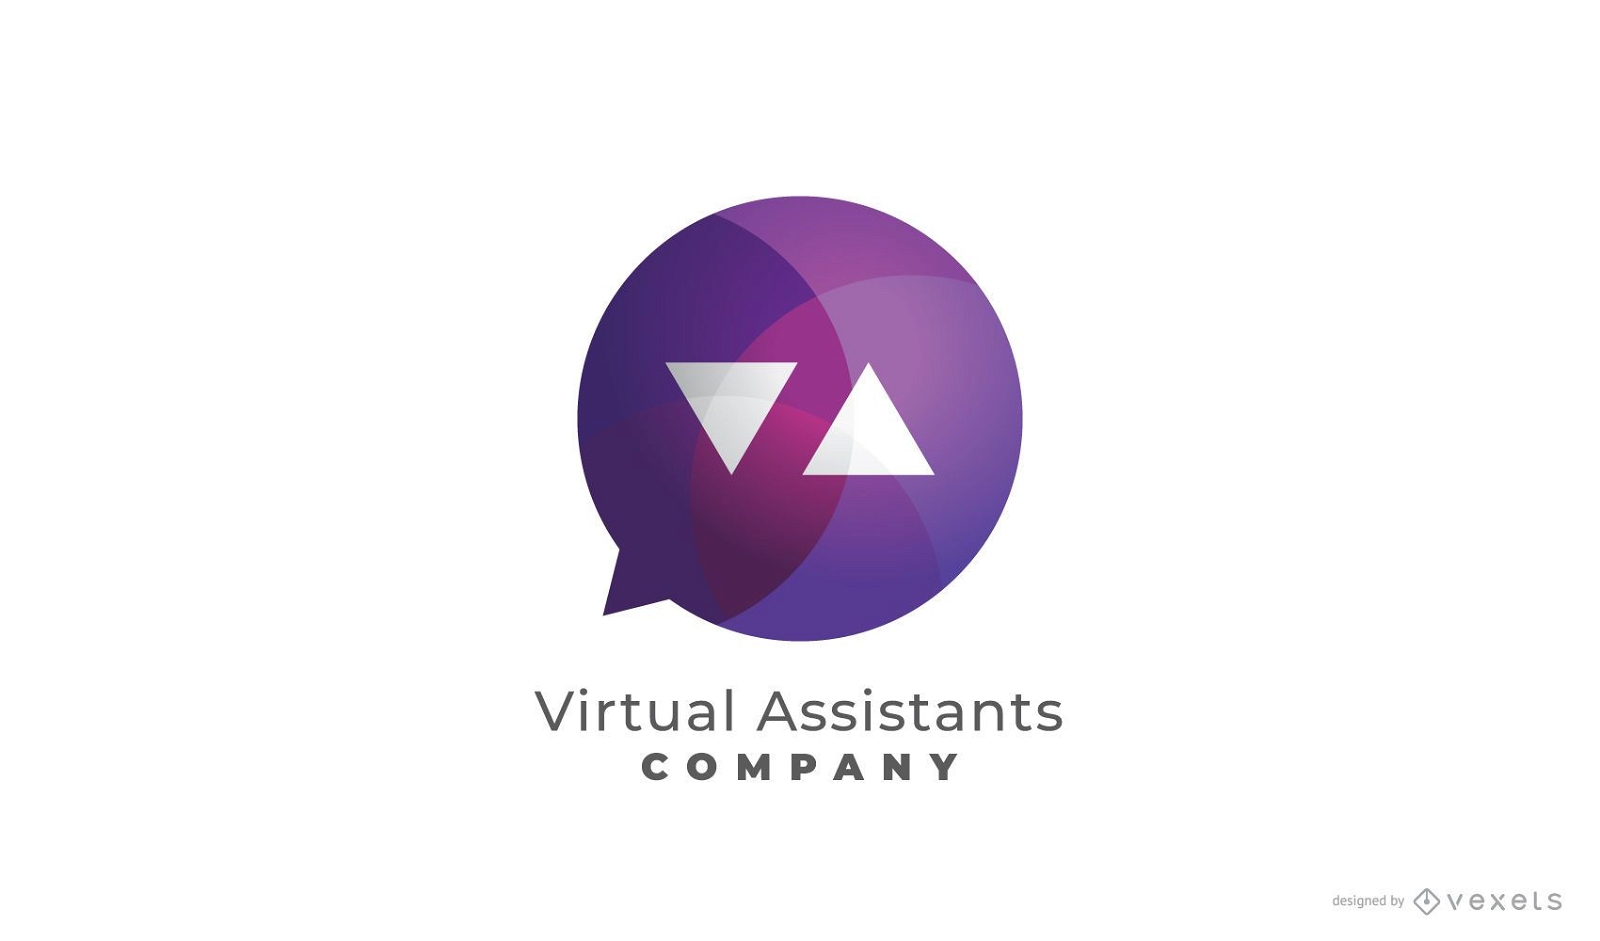 Virtual Assistant logo design :: Behance